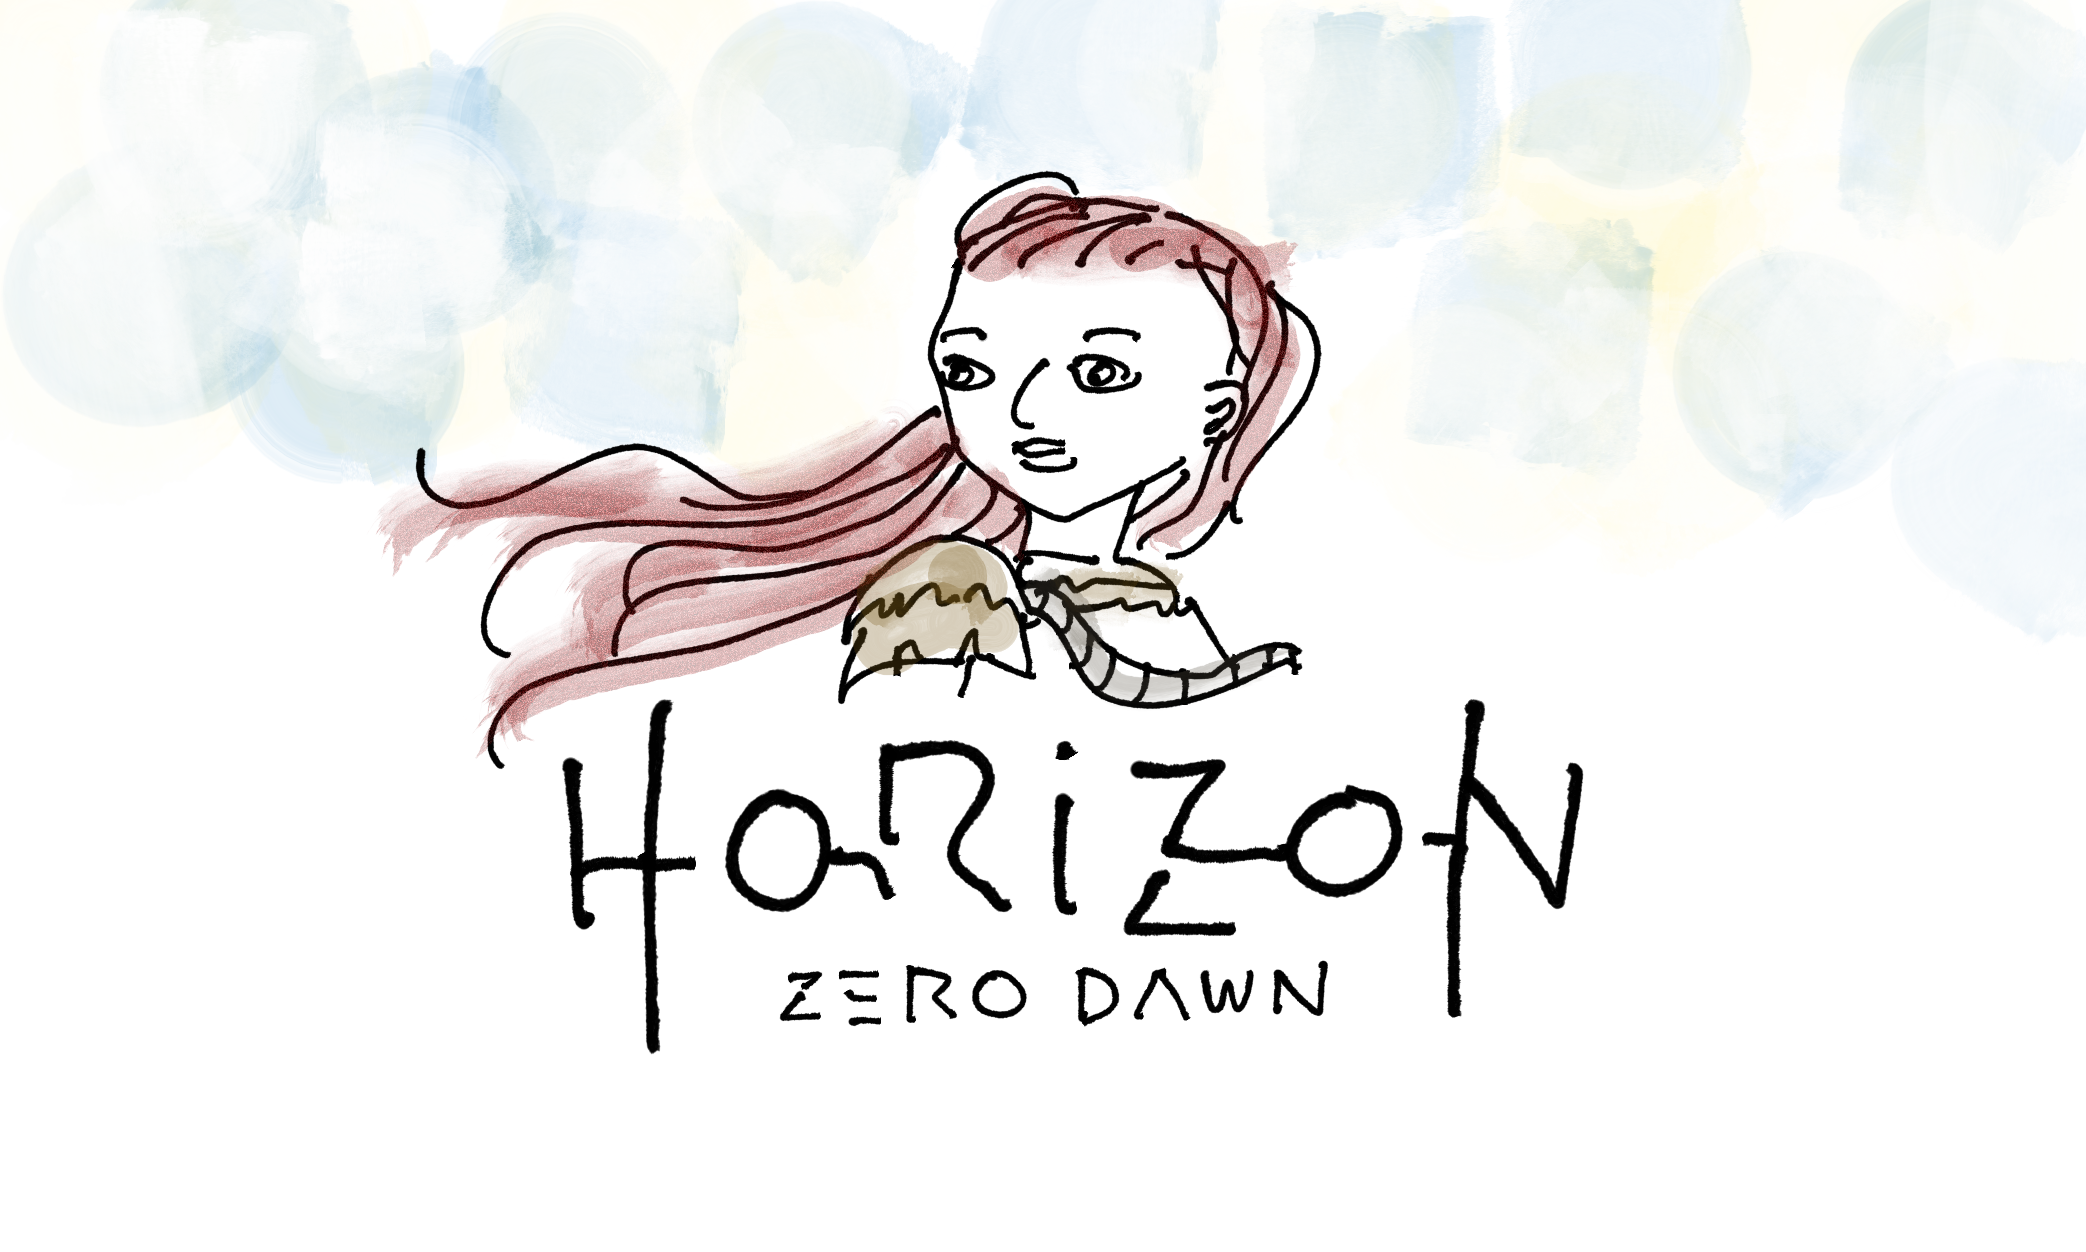 Horizon zero dawnを途中でやめた